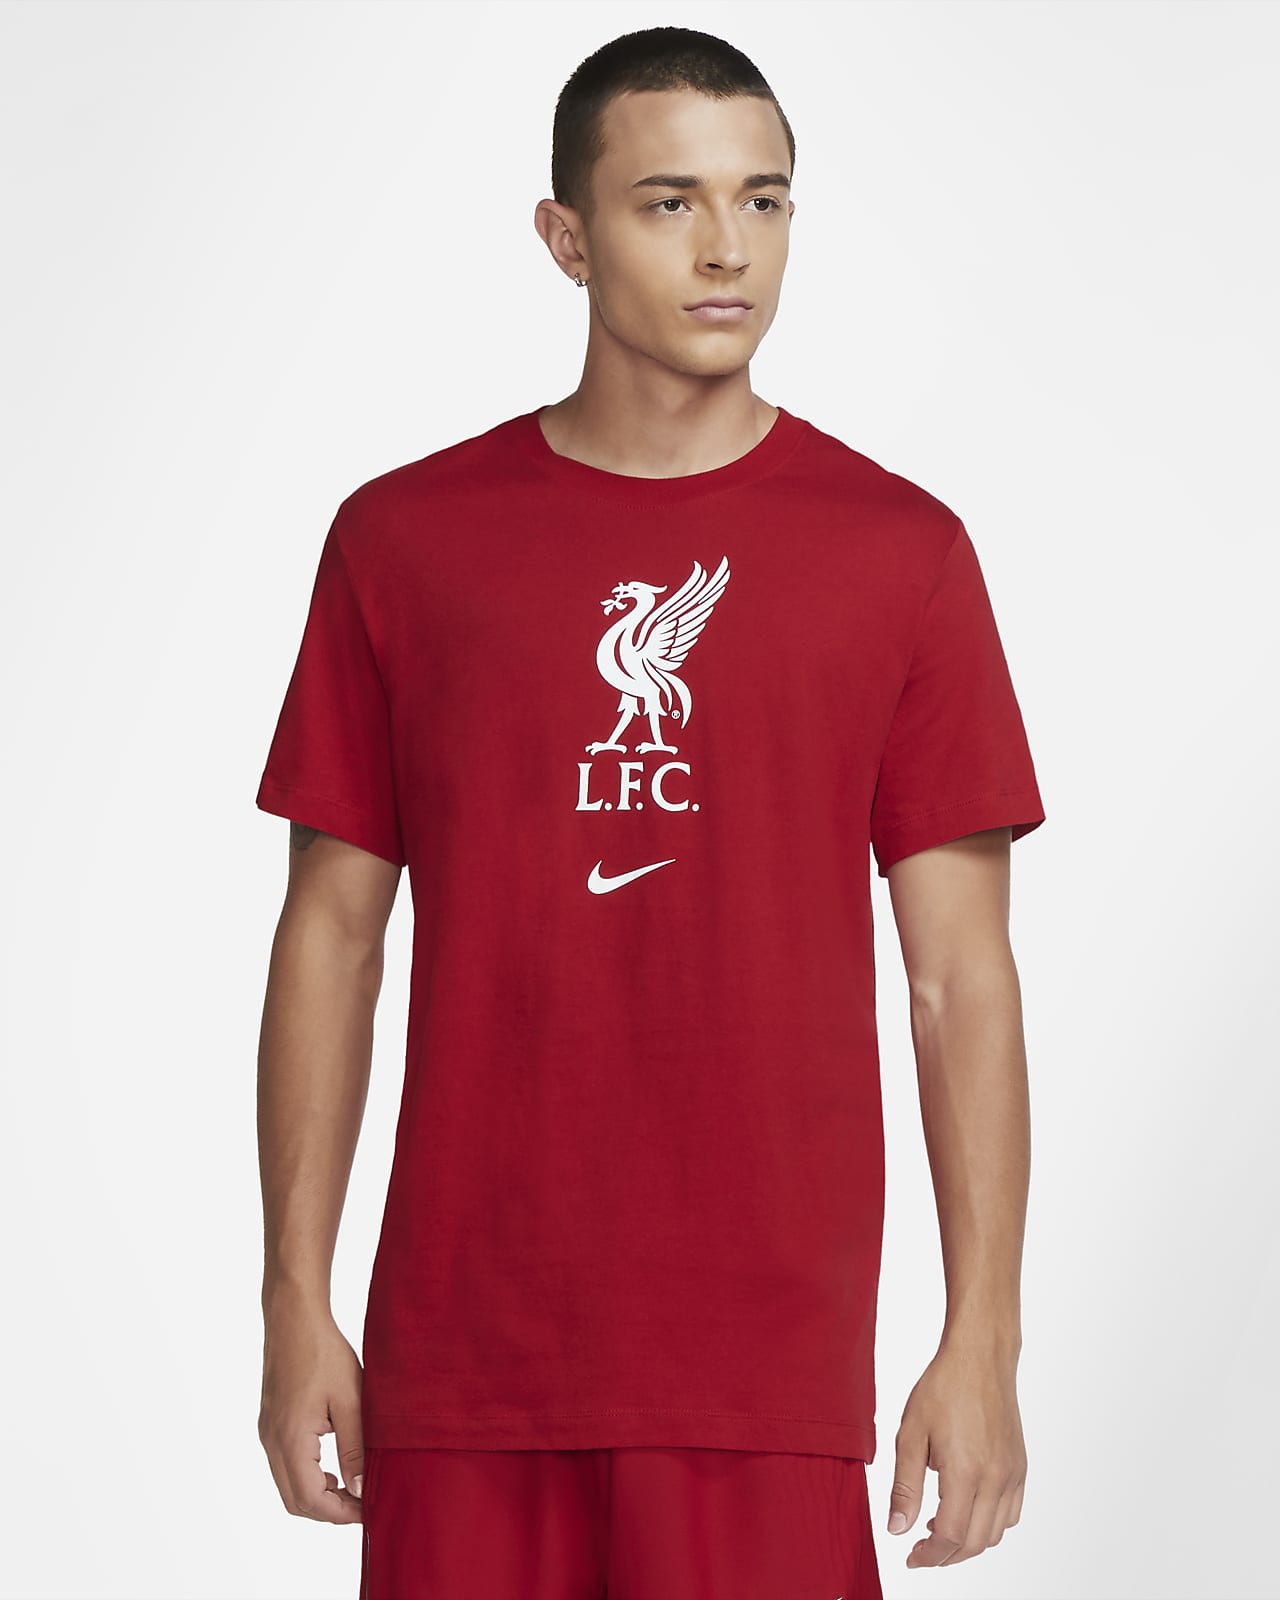 Download Liverpool FC Men's Soccer T-Shirt. Nike.com